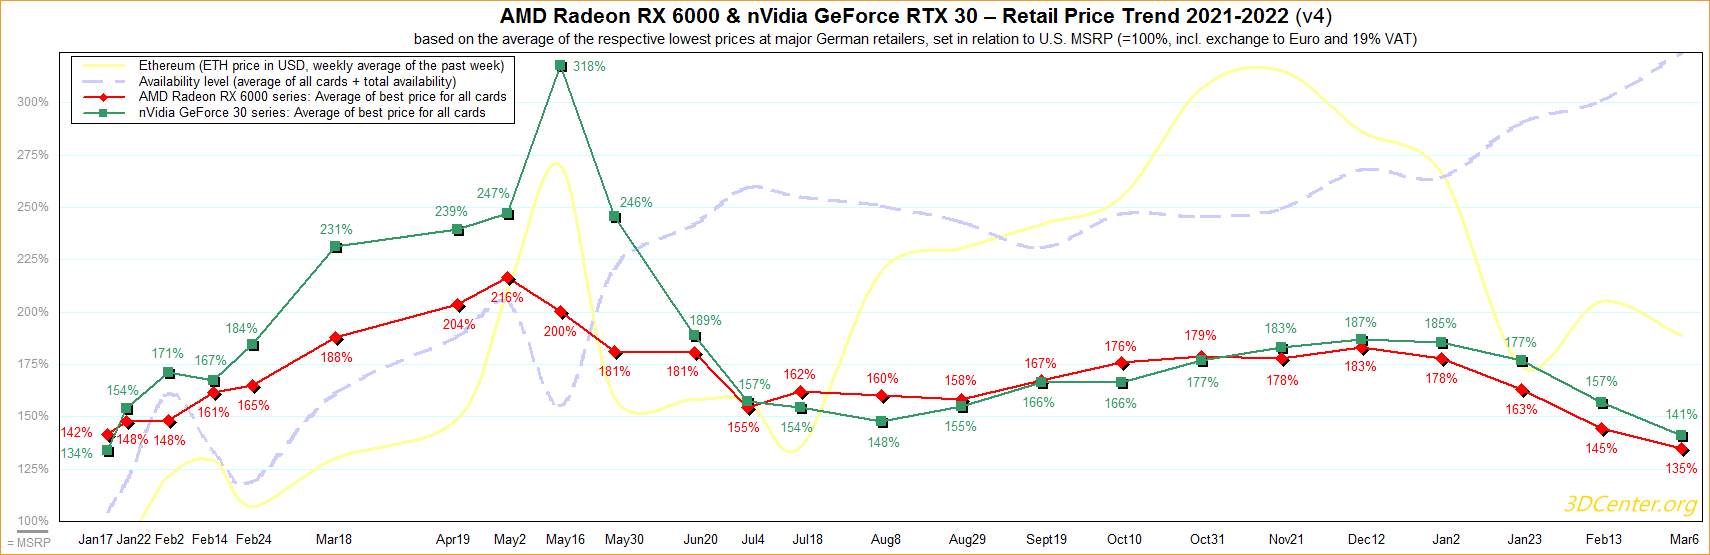 Radeon RX 6000 GeForce RTX 30 GPU reach record low since January 2021 - VideoCardz.com